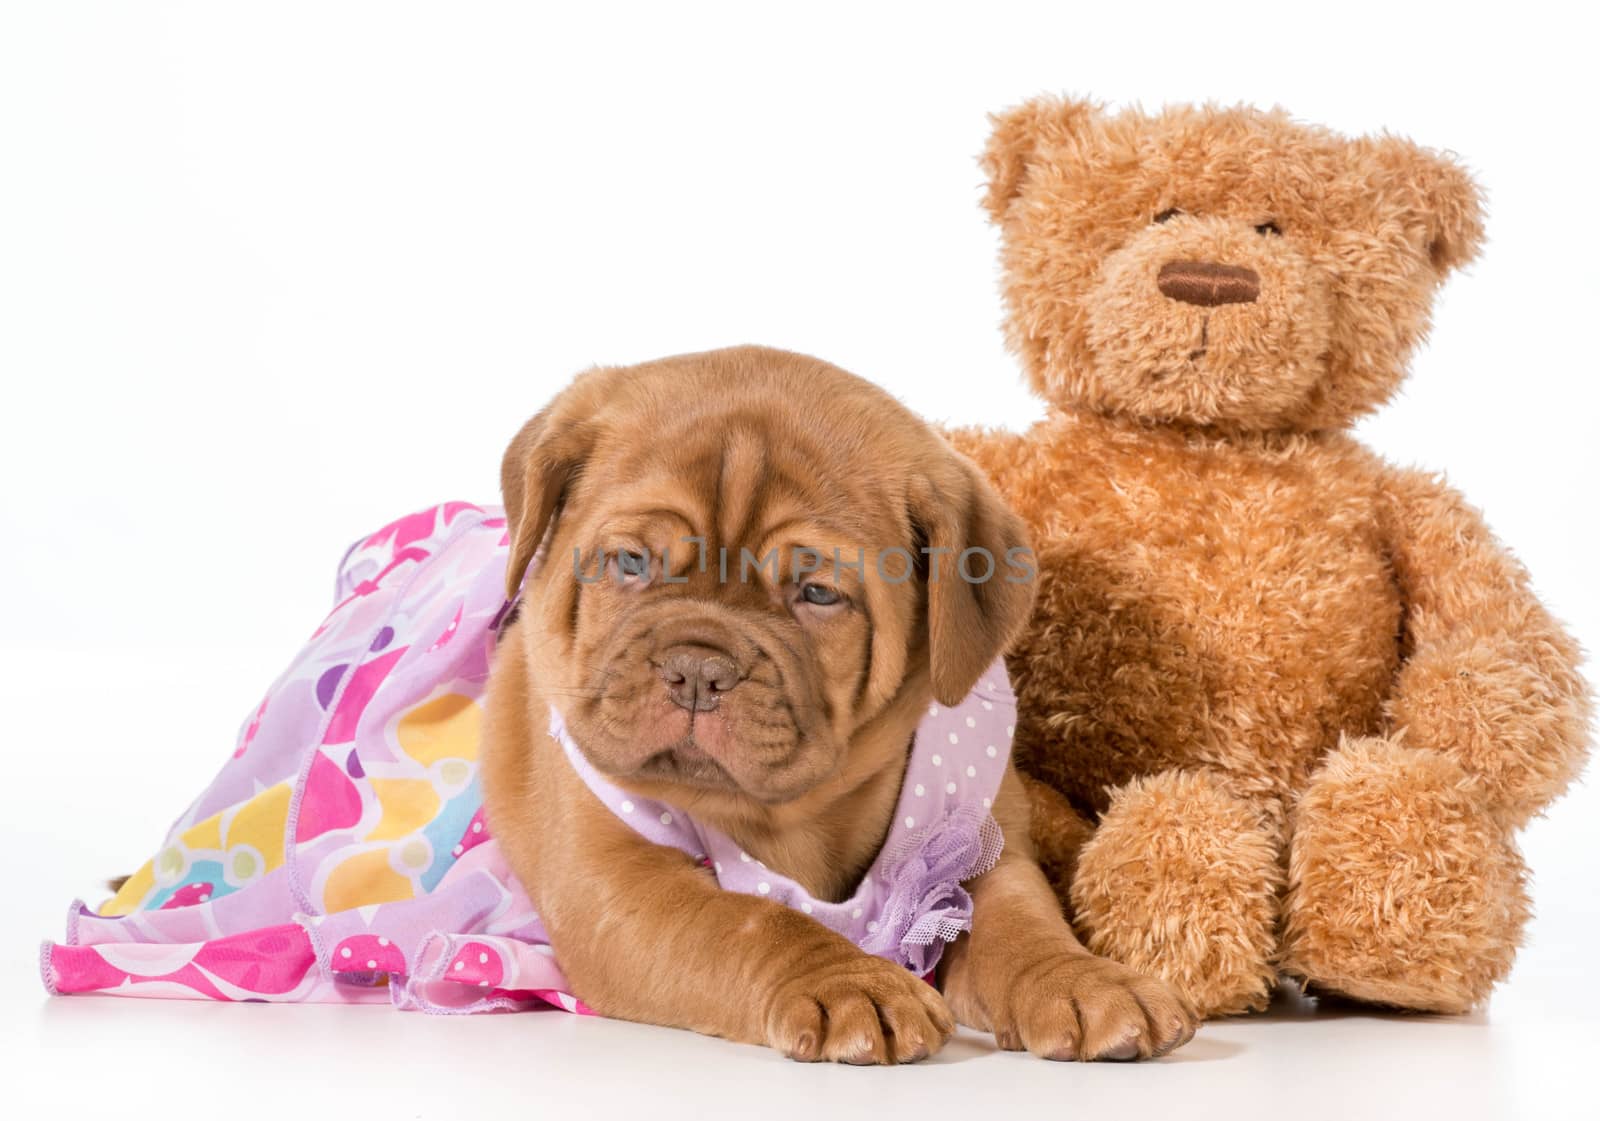 best friends - dogue de bordeaux puppy and teddy bear